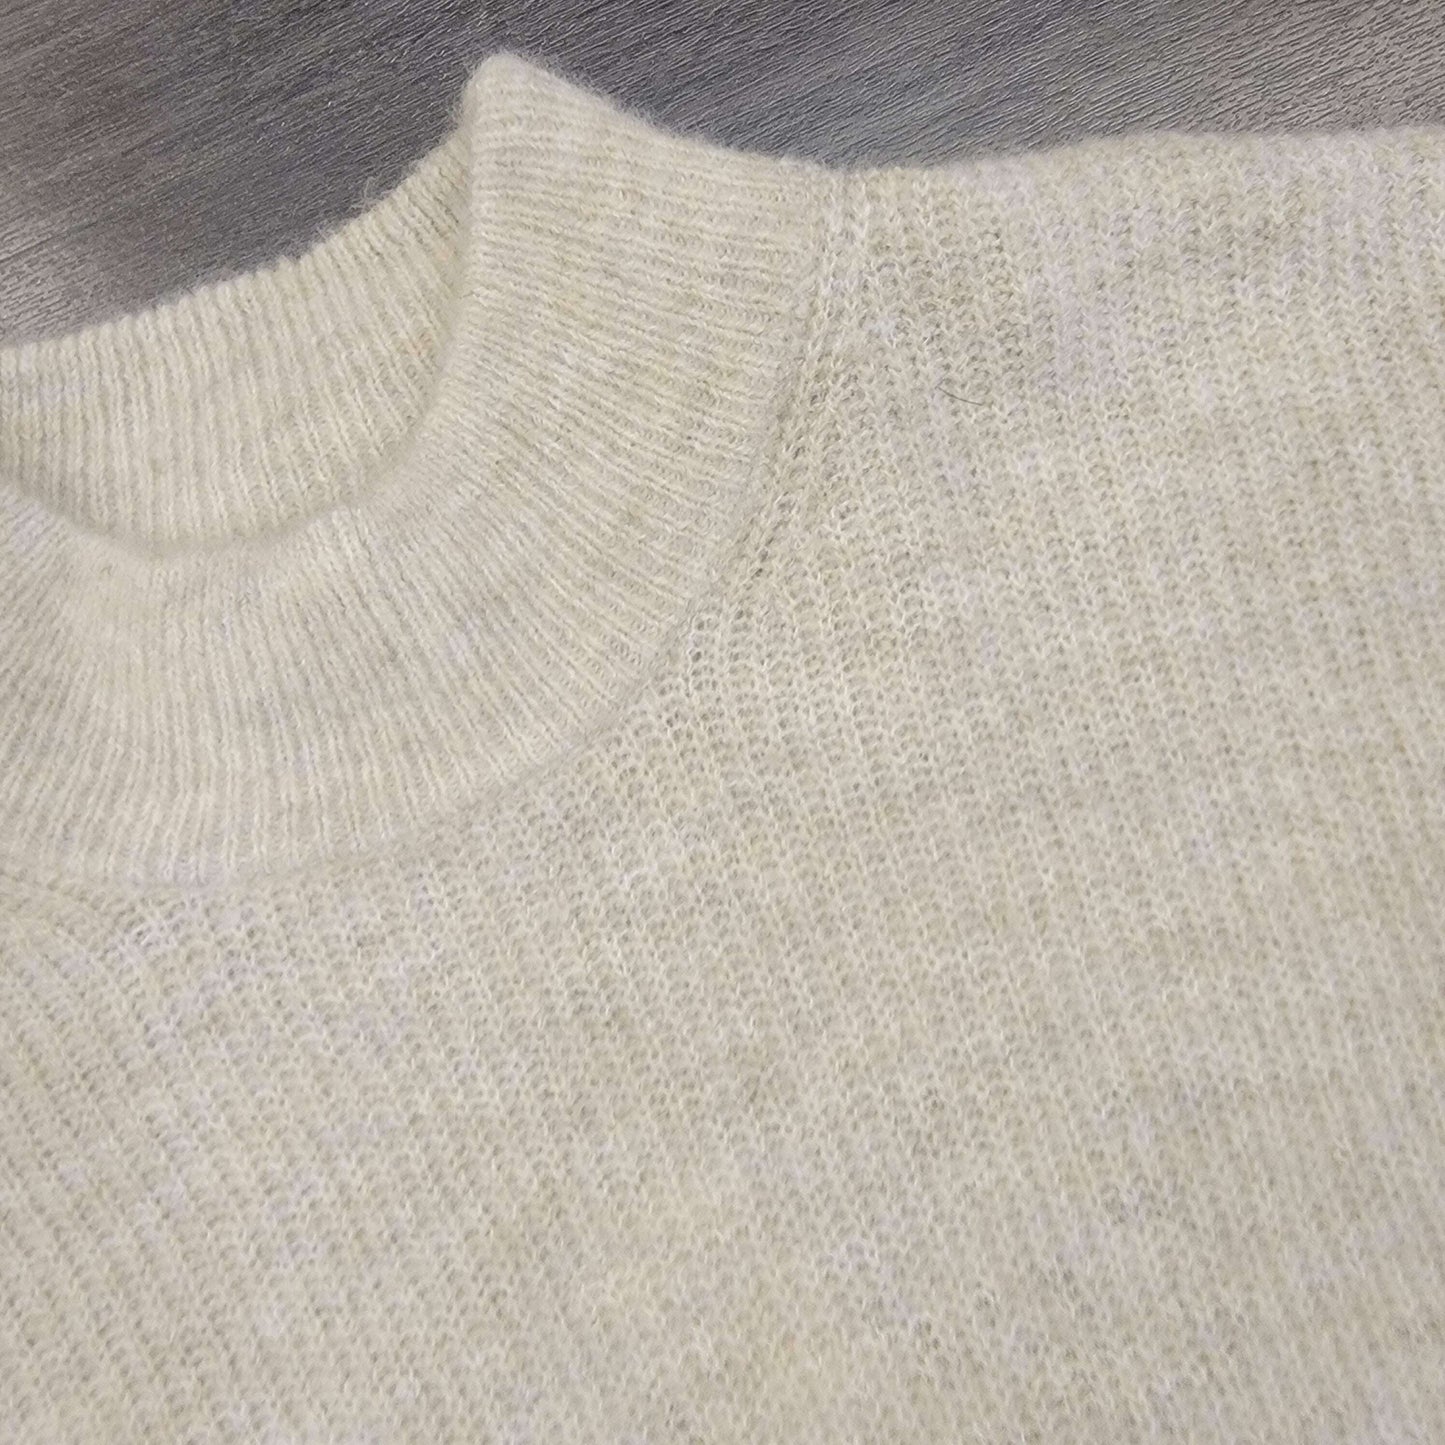 LBLC the Label - Nola Sweater - Sand, CLOTHING, LBLC the label, Plum Bottom